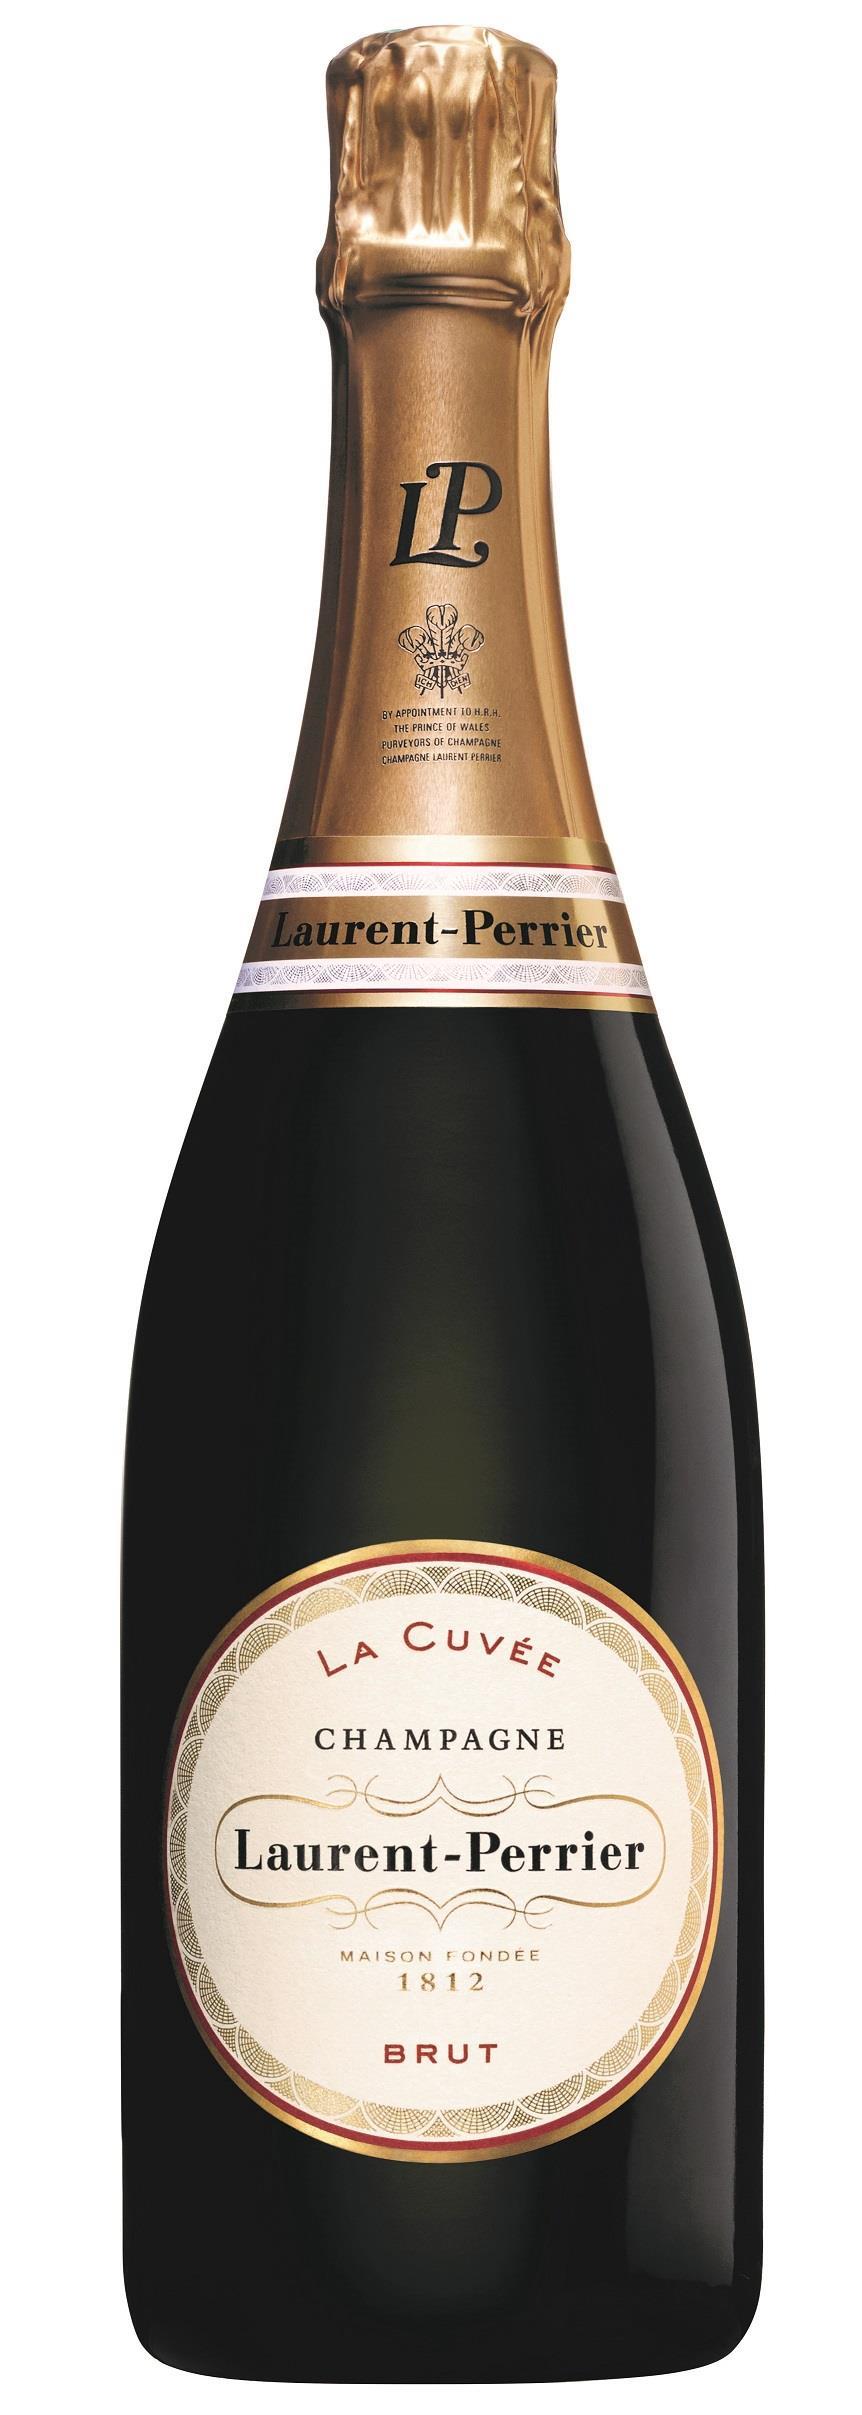 Champagner Laurent-Perrier La Cuvée Brut 0,375 Liter von Laurent-Perrier